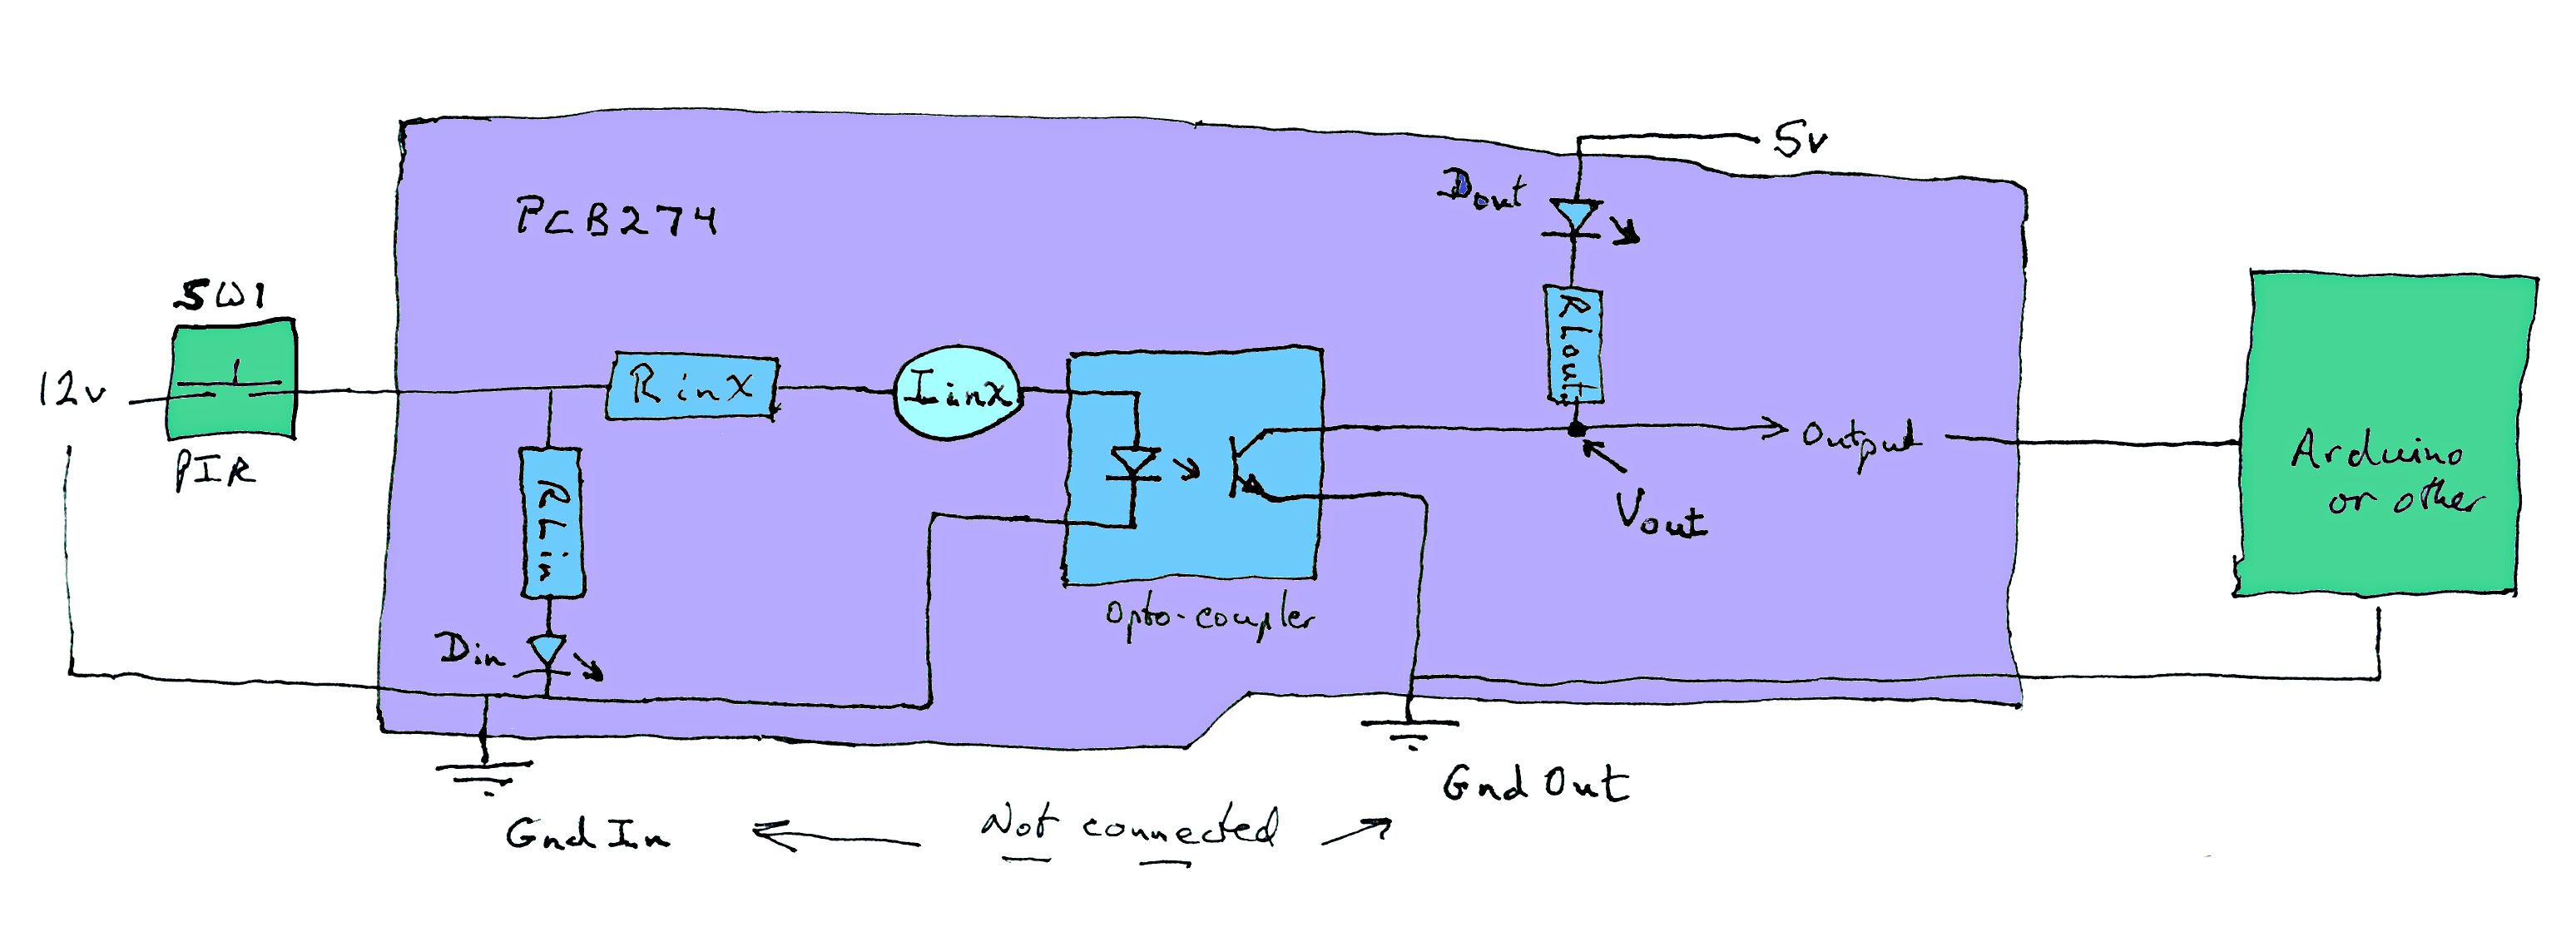 PCB274 (quad optocoupler breakout)- simplified diagram of circuit